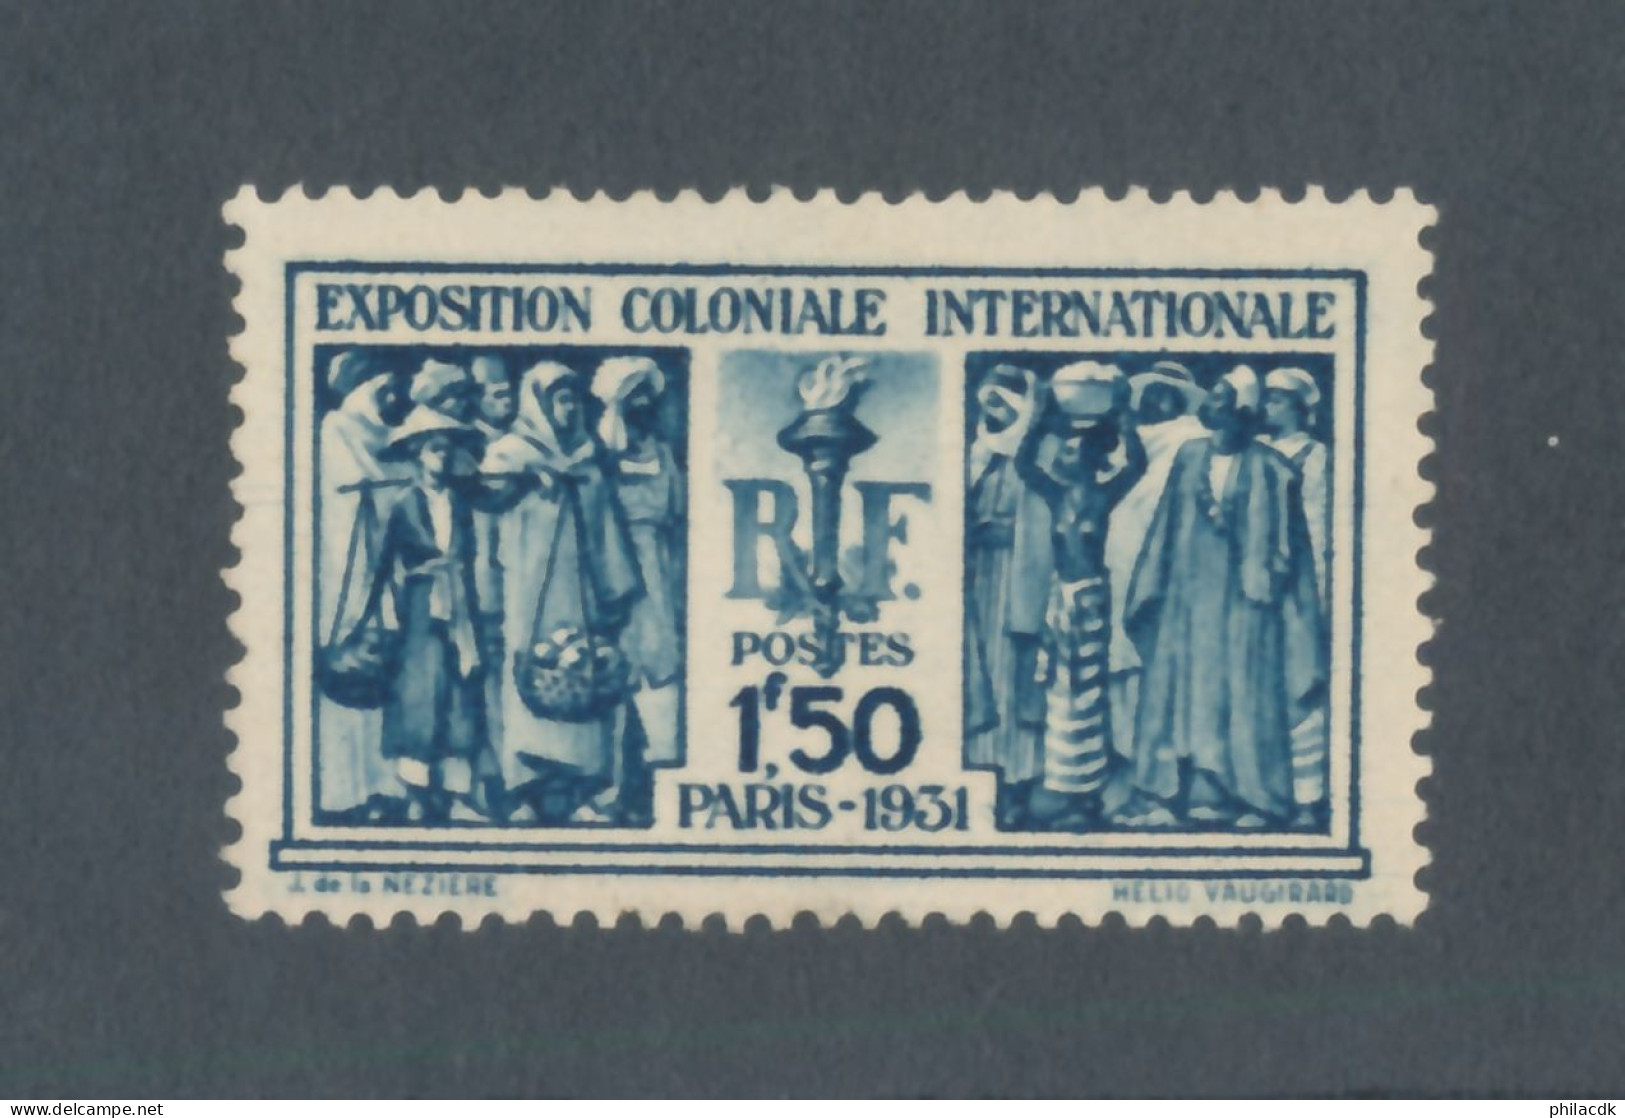 FRANCE - N° 274 NEUF* AVEC CHARNIERE AVEC GOMME NON ORIGINALE (GNO) - COTE : 50€ - 1930/31 - Unused Stamps